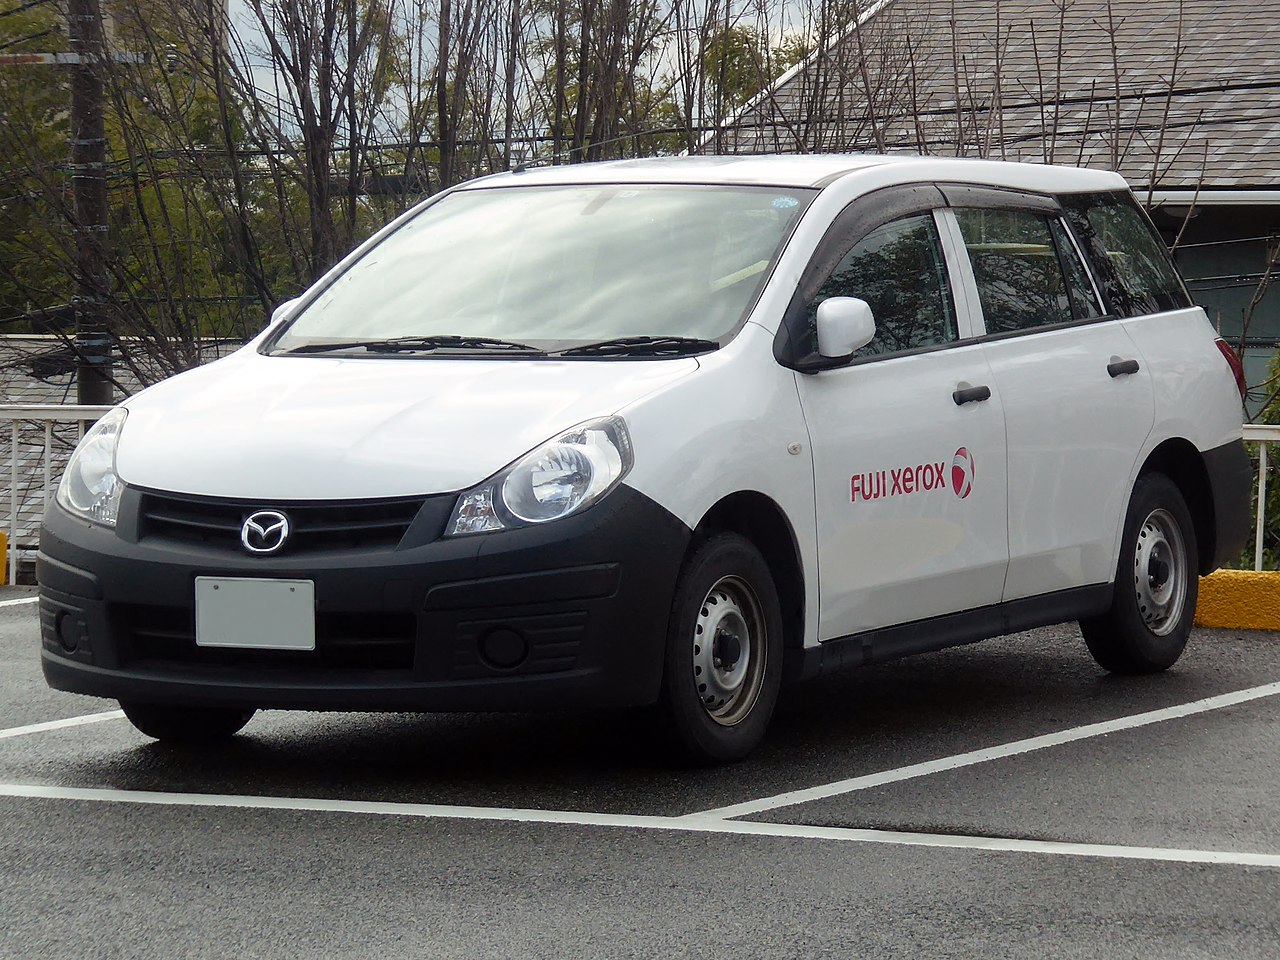 File:Mazda Familia VAN DX (DBF-BVY12) front.jpg - Wikimedia Commons